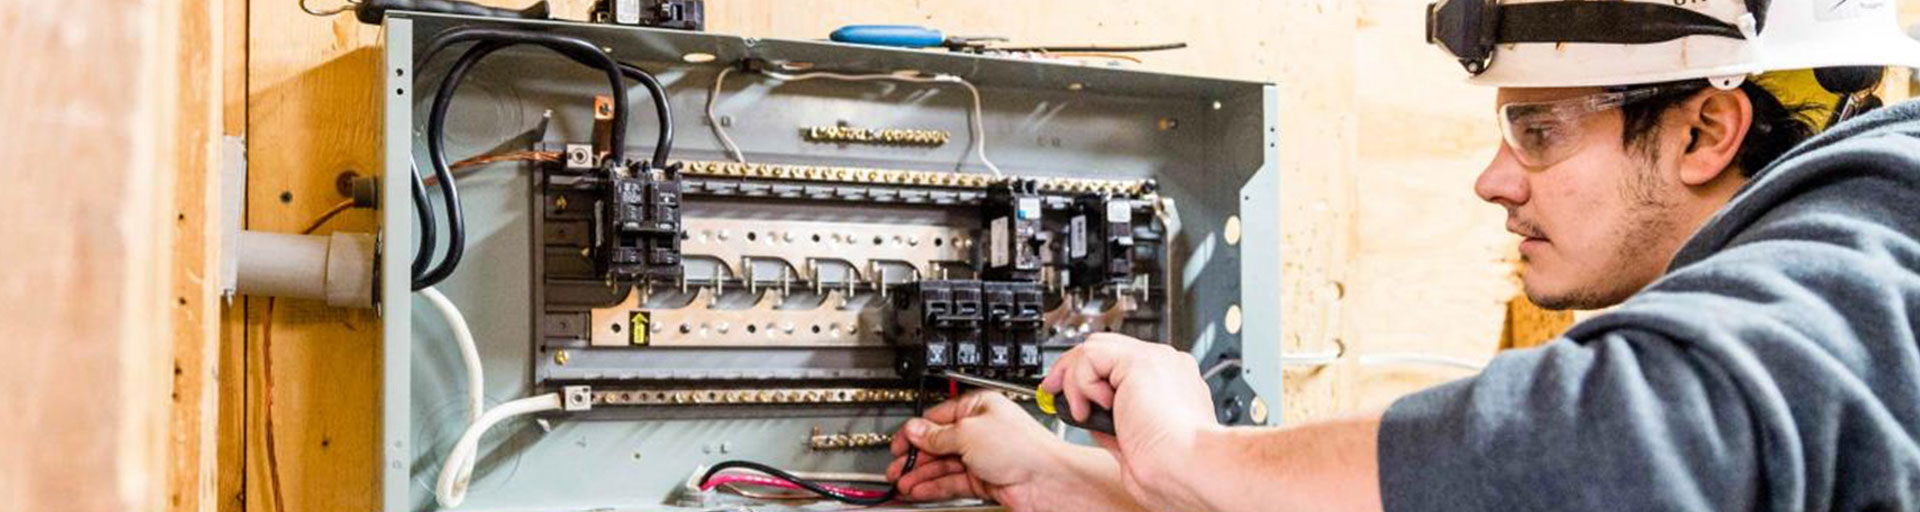 Electrician maintenance jobs canada